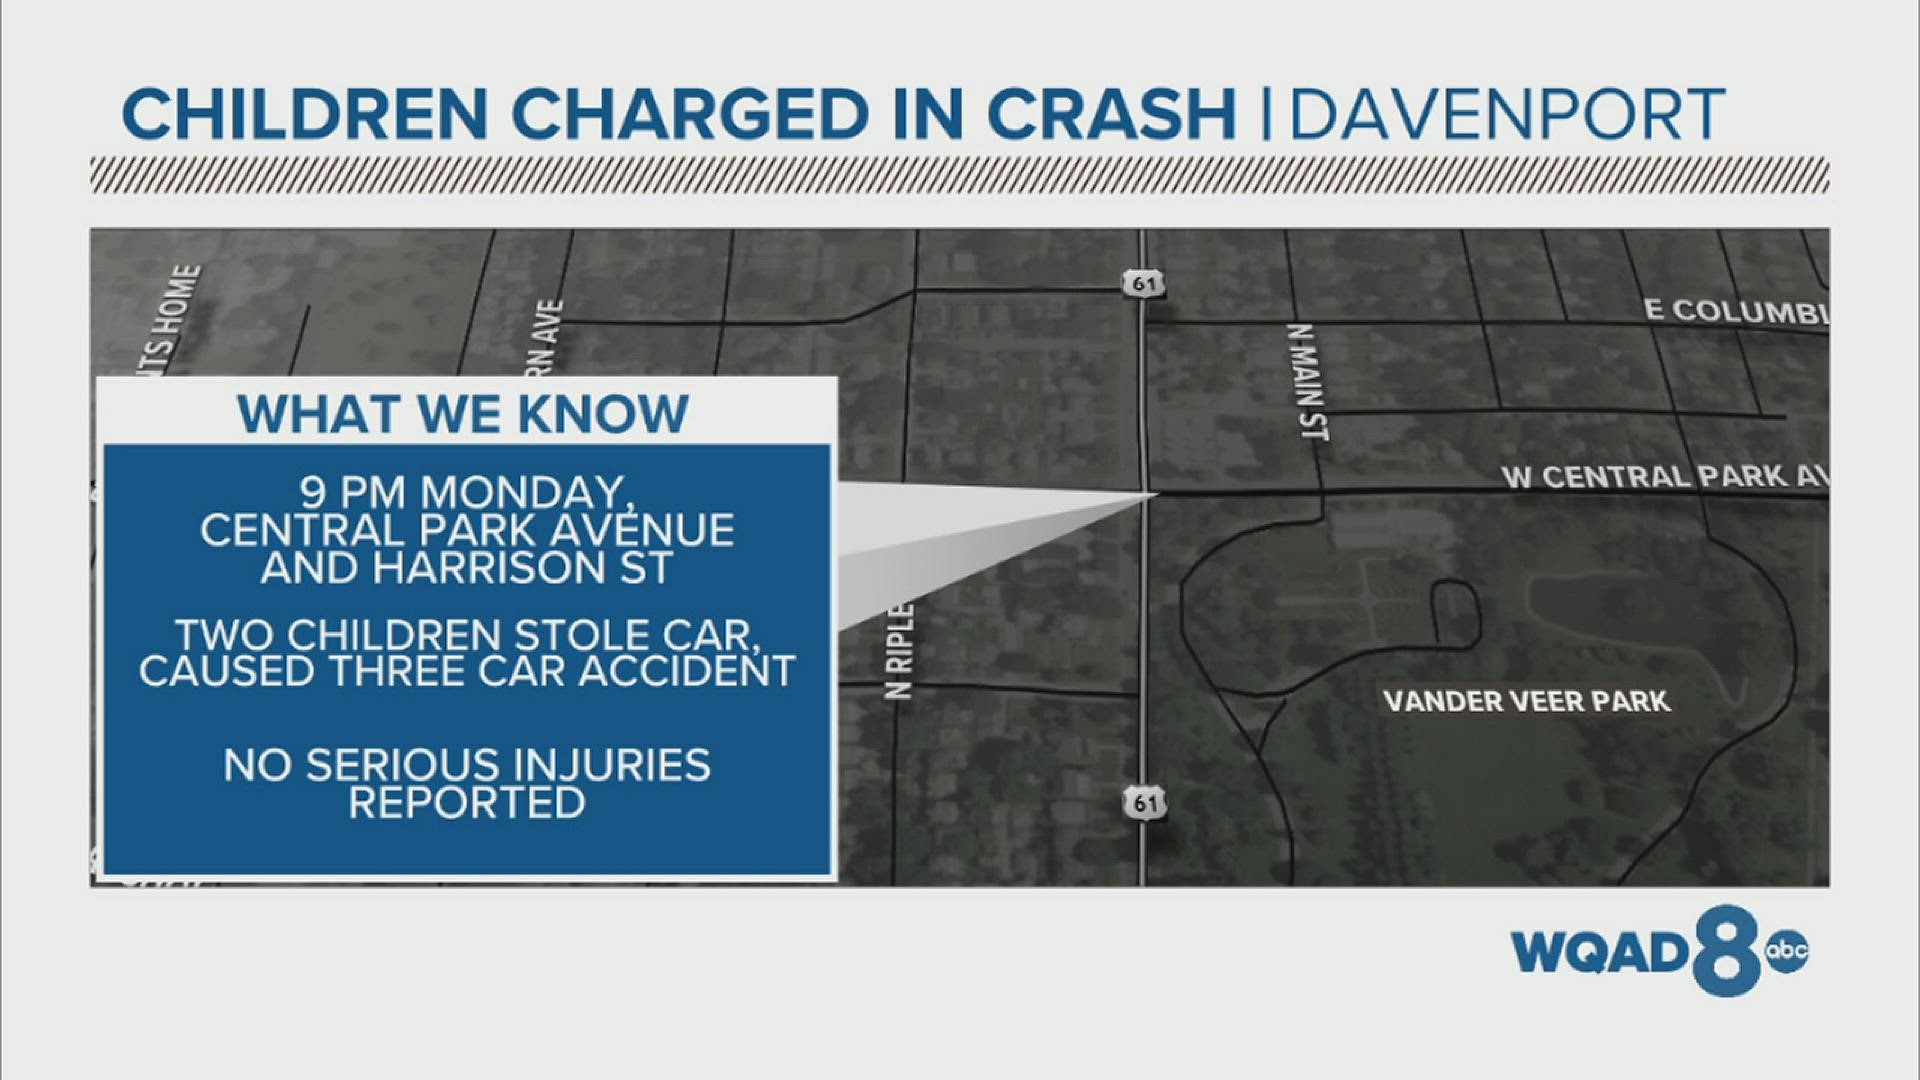 The accident happened around 9 p.m. Monday, November 8th in Davenport.